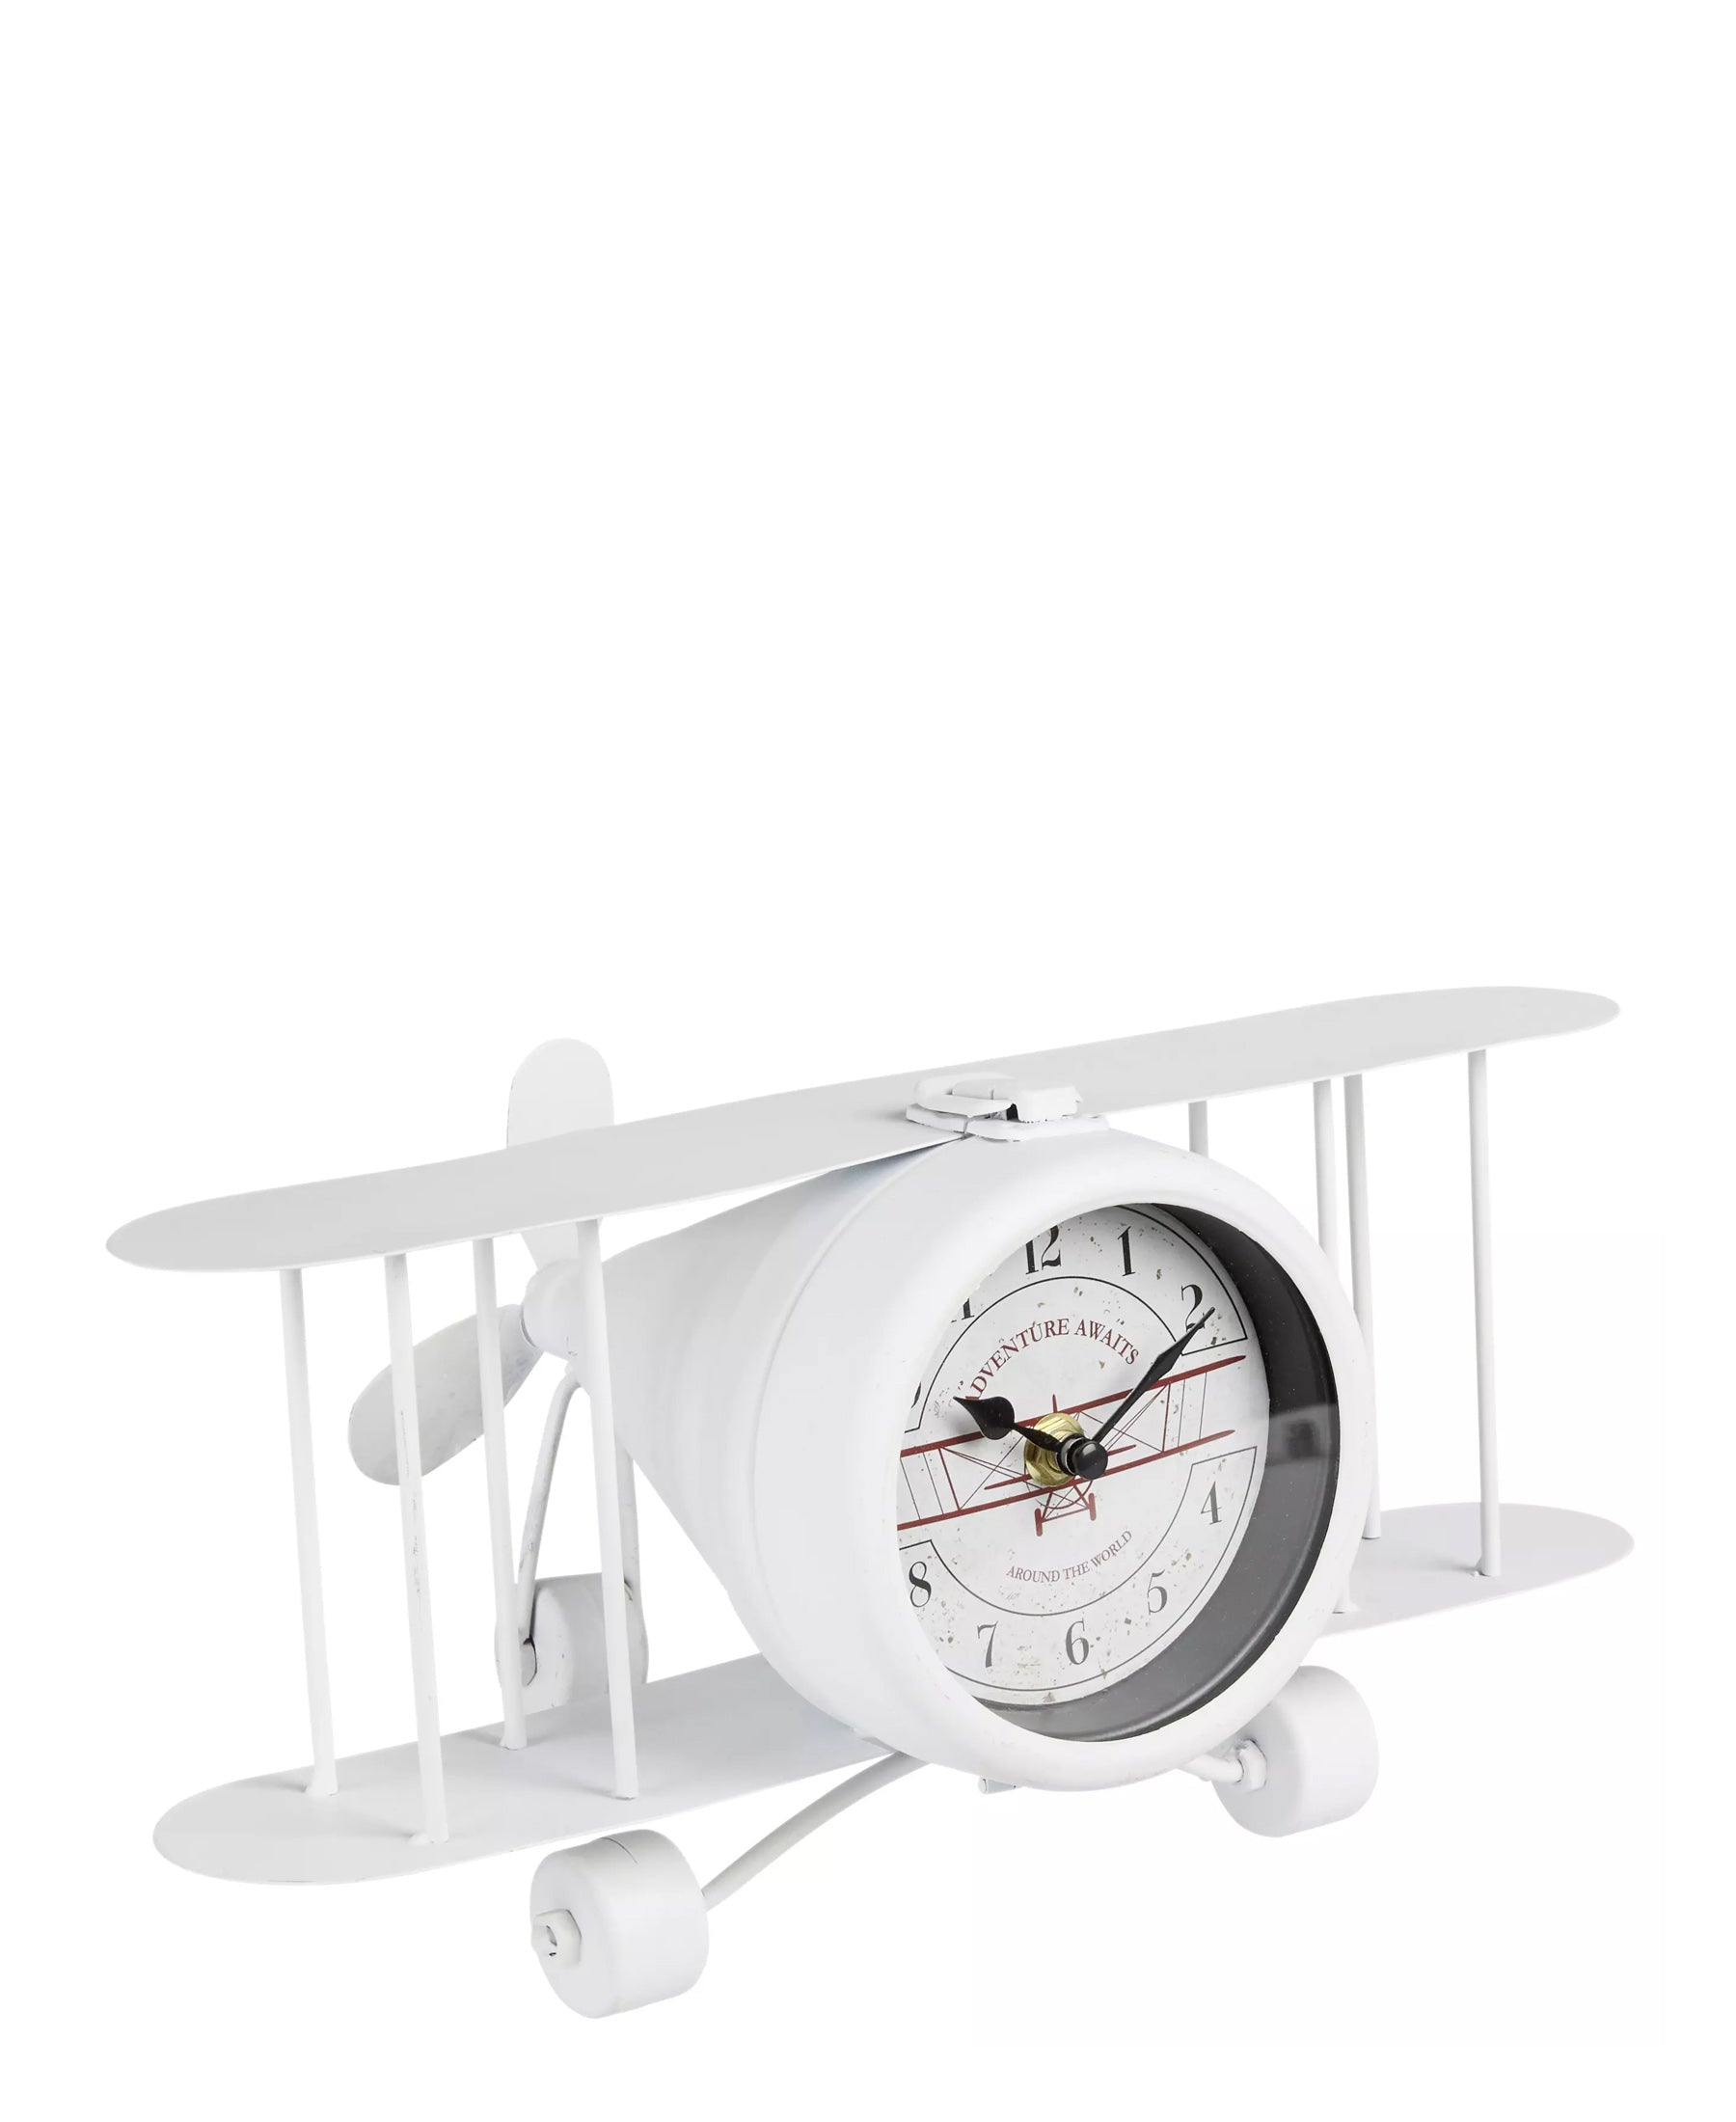 Urban Decor Retro Clock Airplane - White